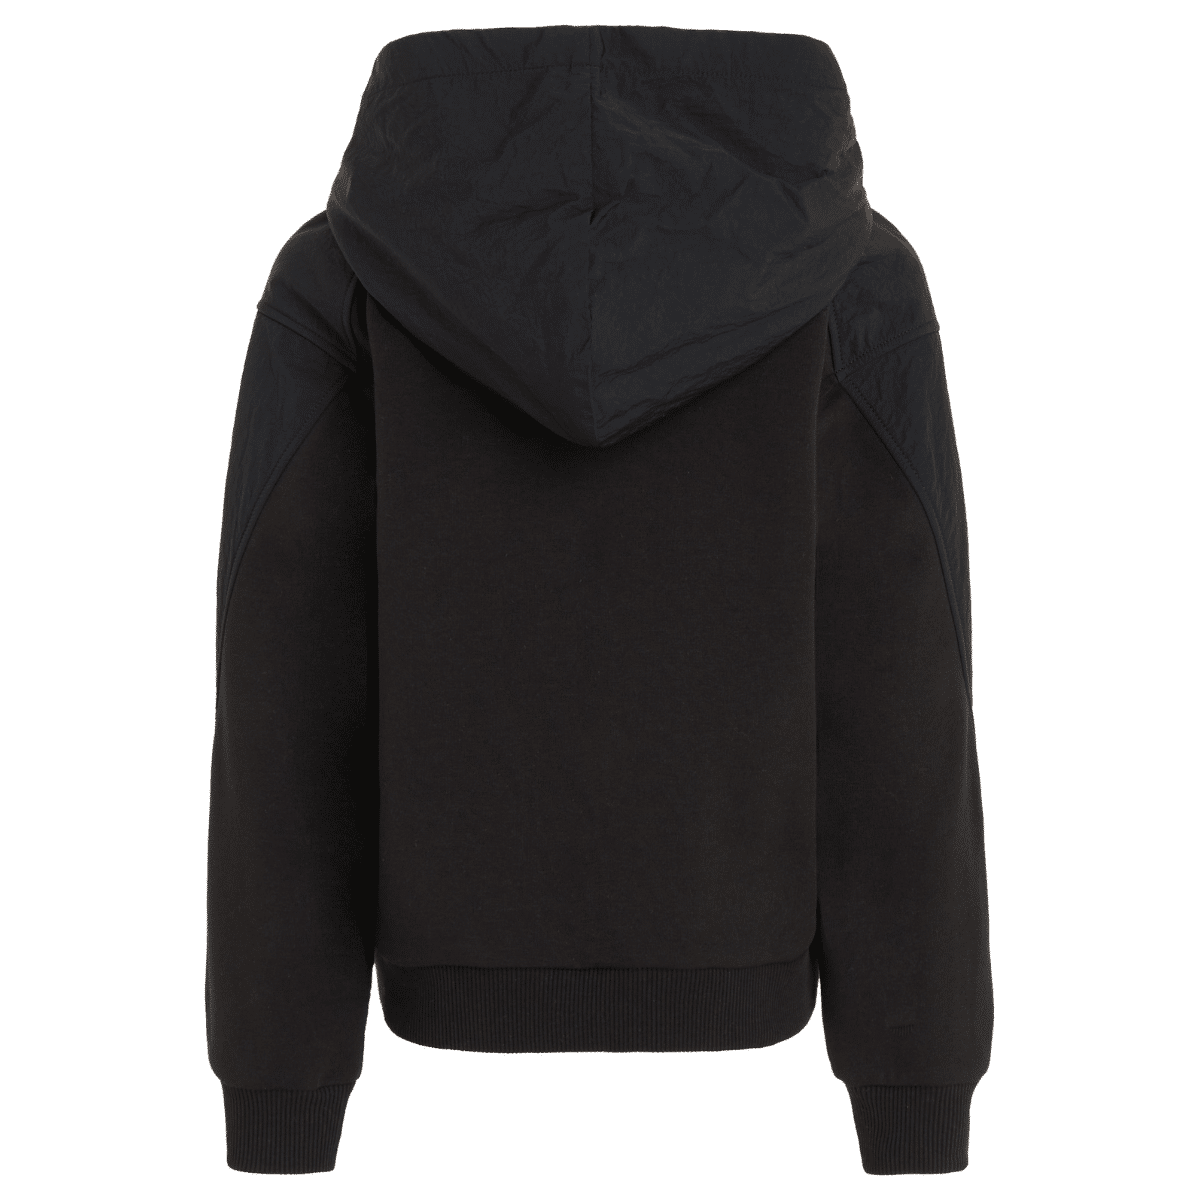 calvin klein unisex childrens black hoodie with white logo back view